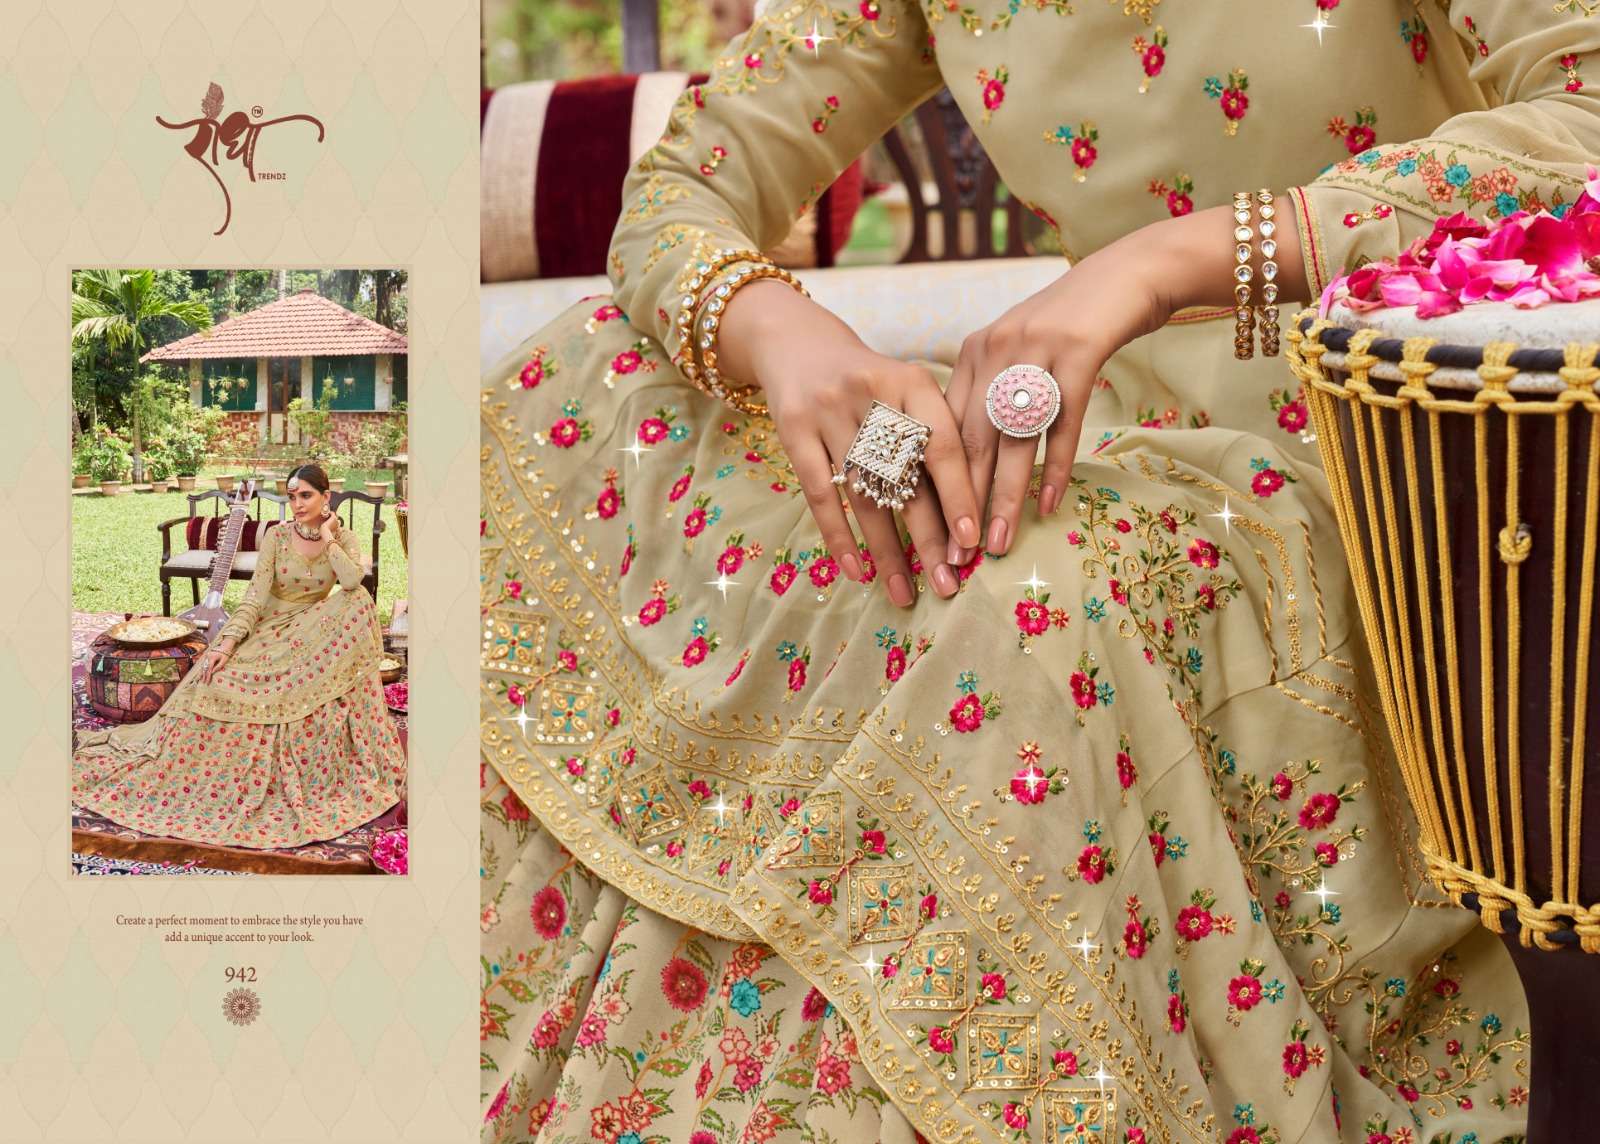 radha trendz jasmine 941-944 series designer wedding wear pakistani salwar kameez wholesaler surat